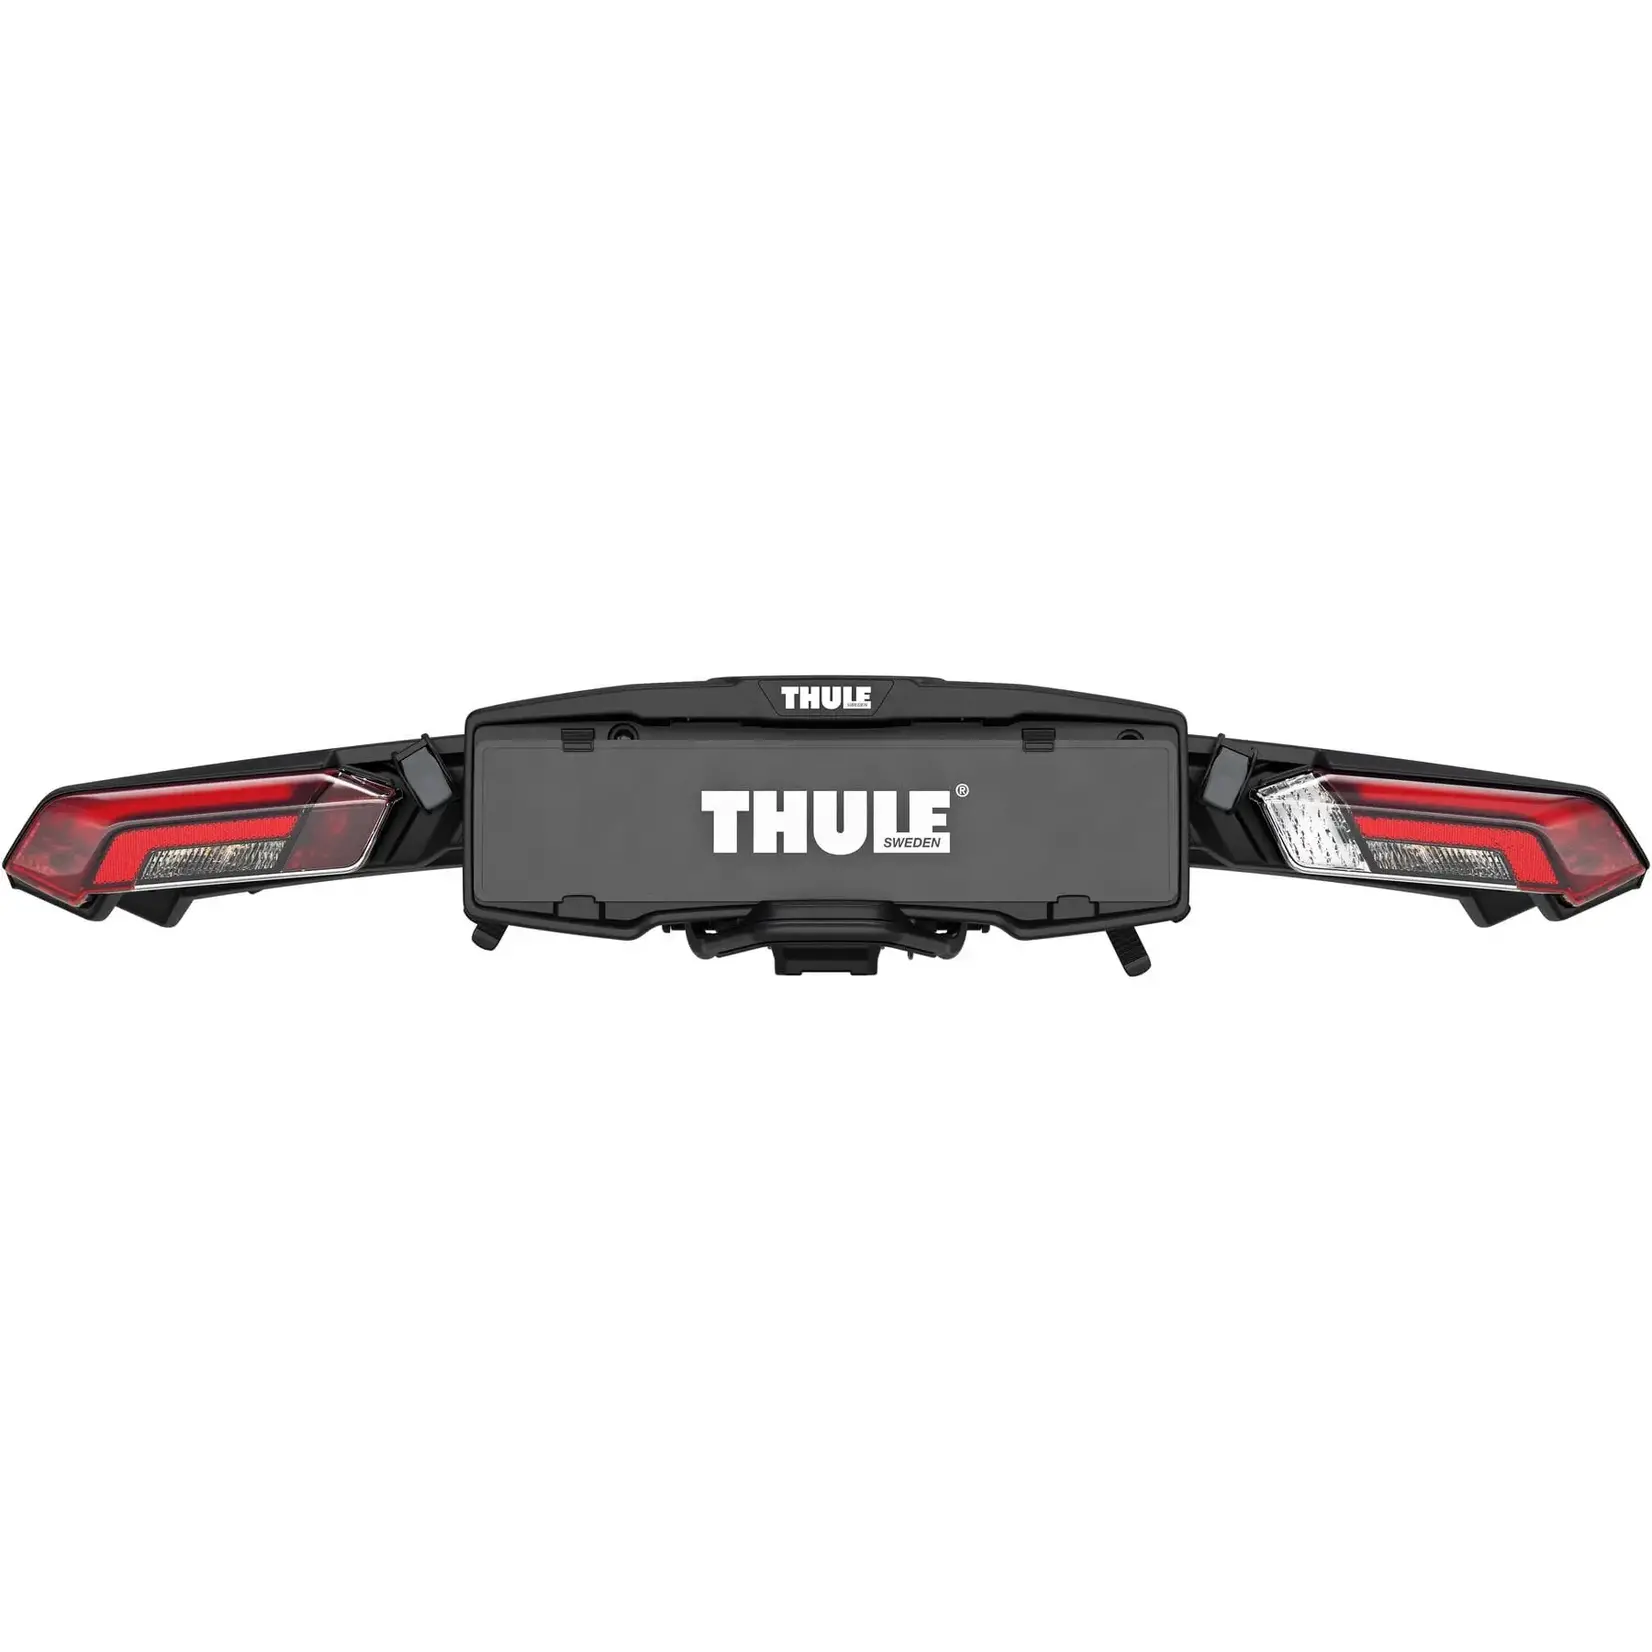 Thule Thule Epos 2-bike towball carrier 13-pin